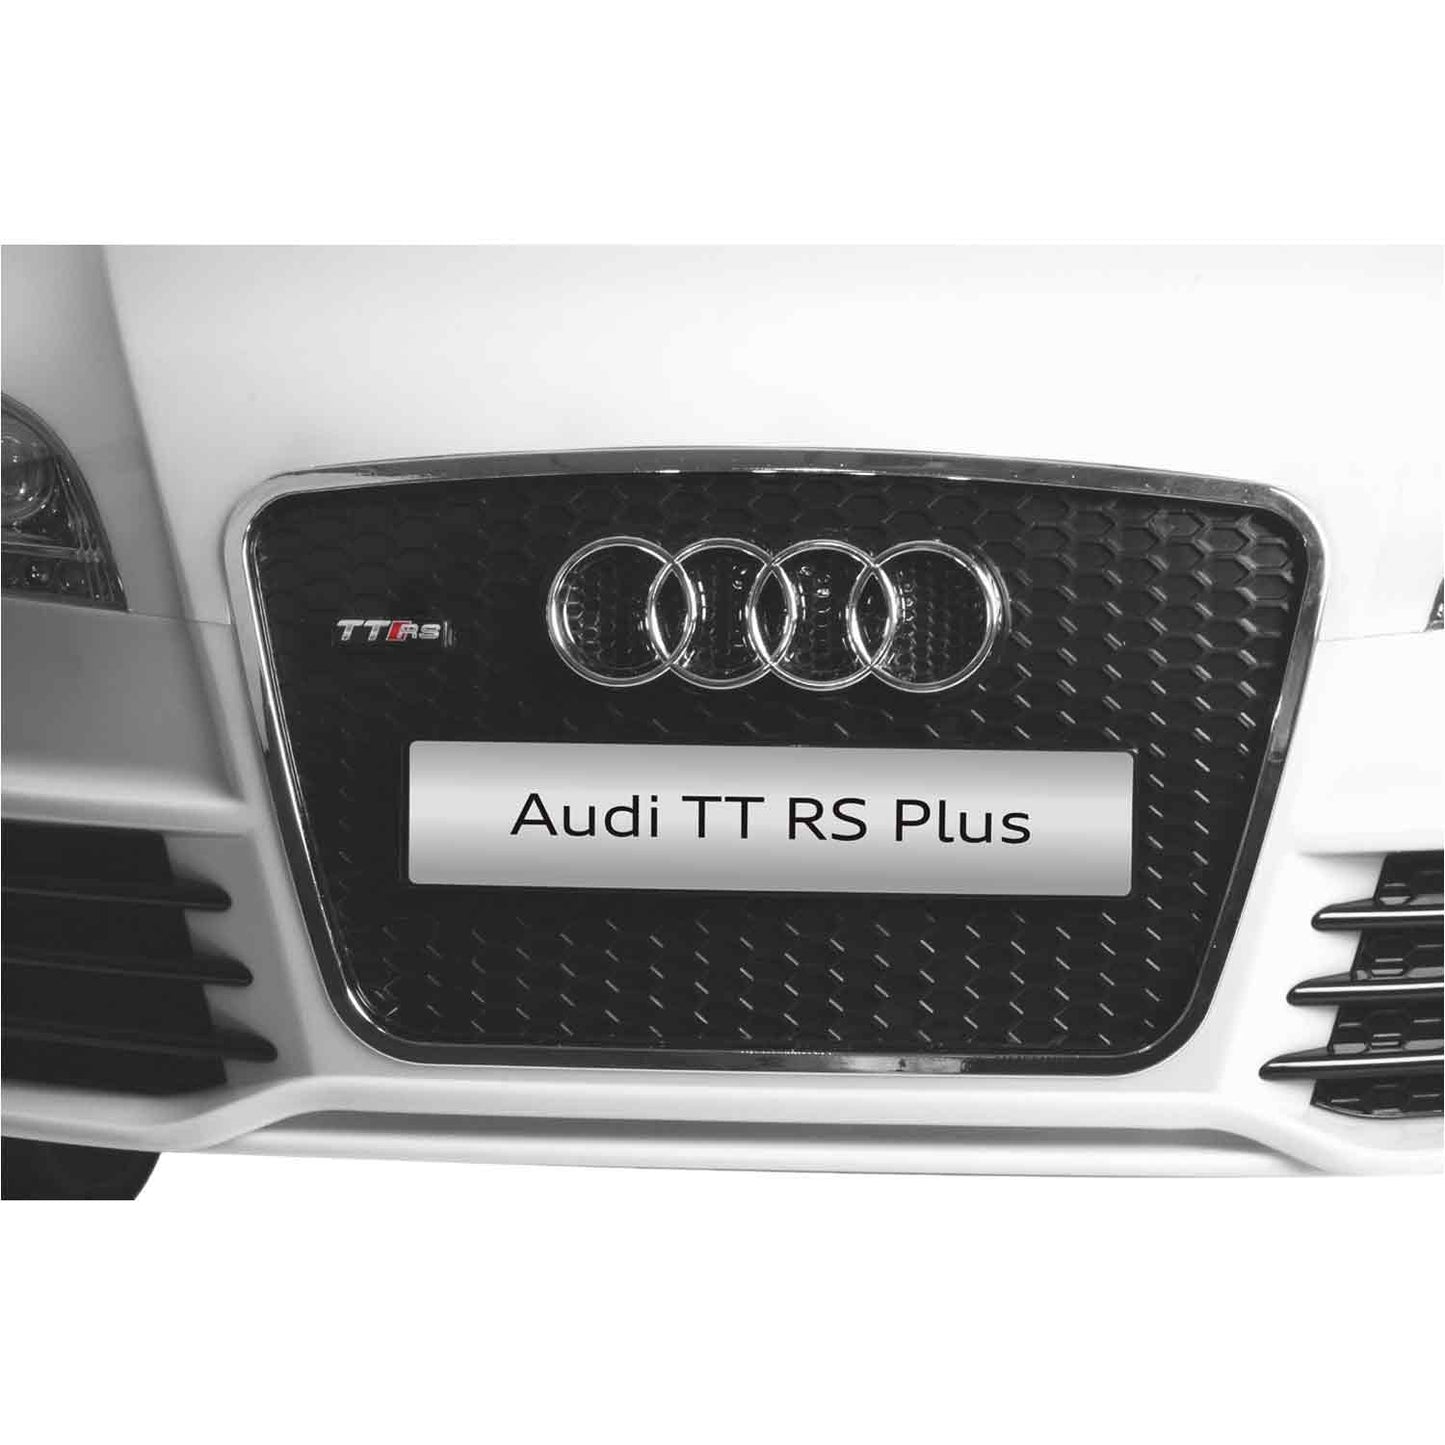 Audi TT RS Plus~White